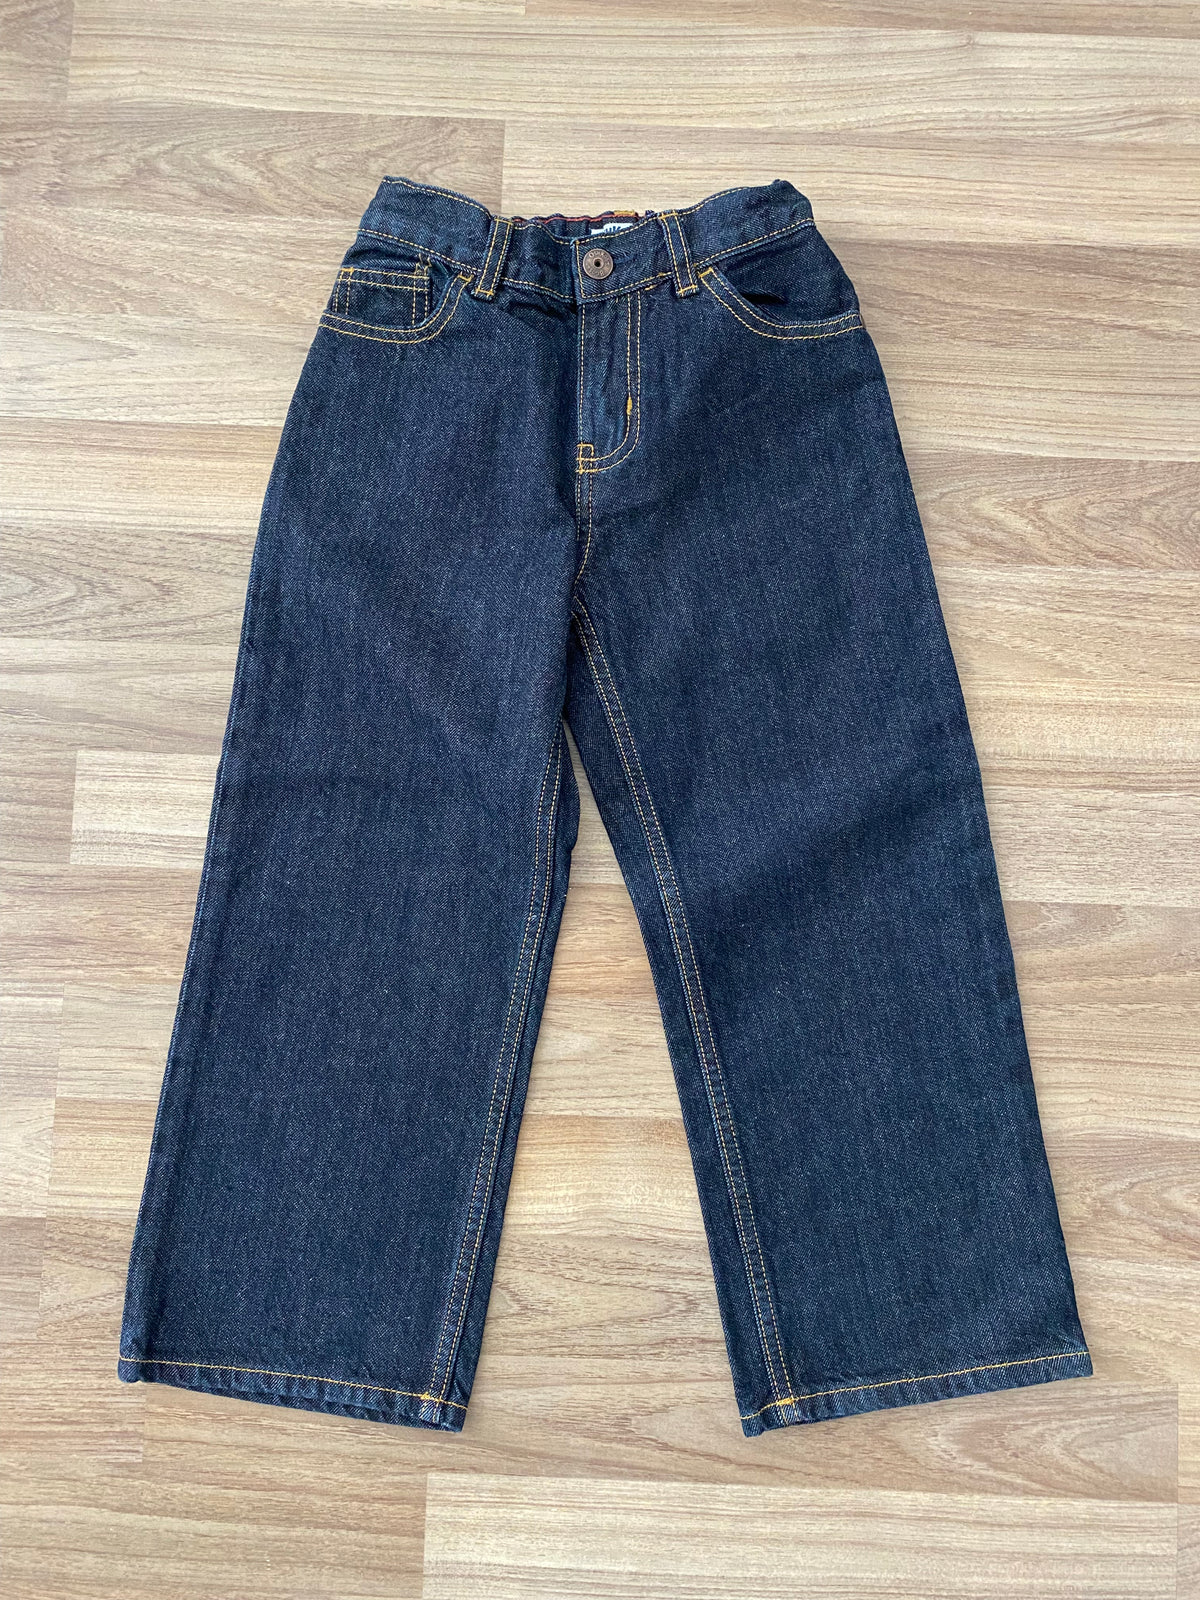 Jeans (Boys Size 5)